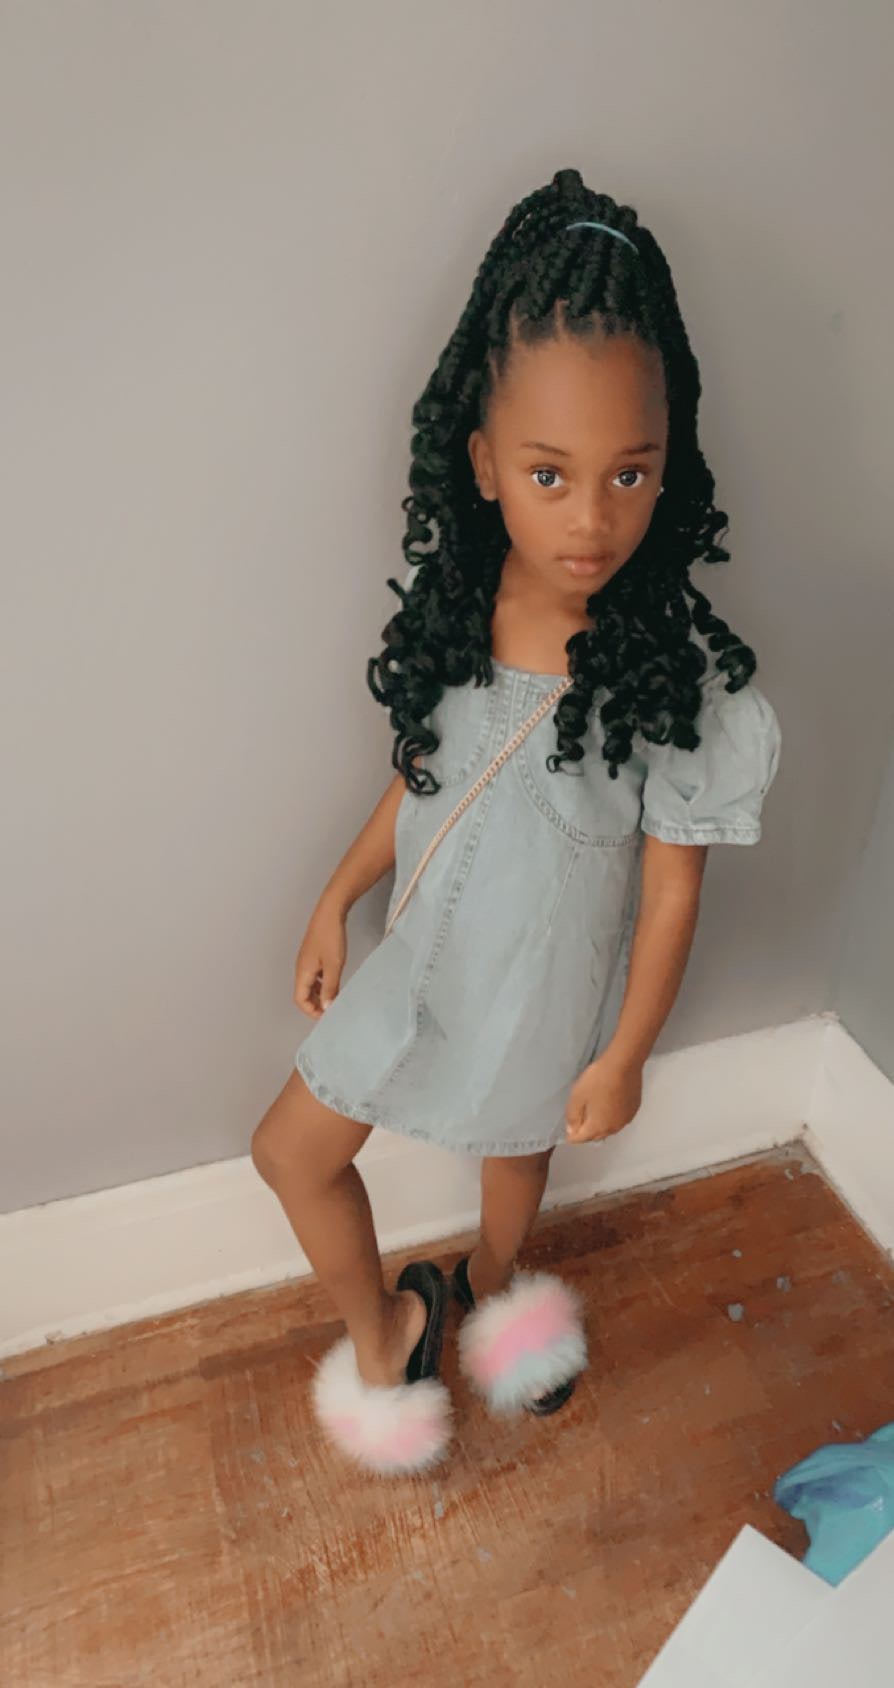 Baby doll dress